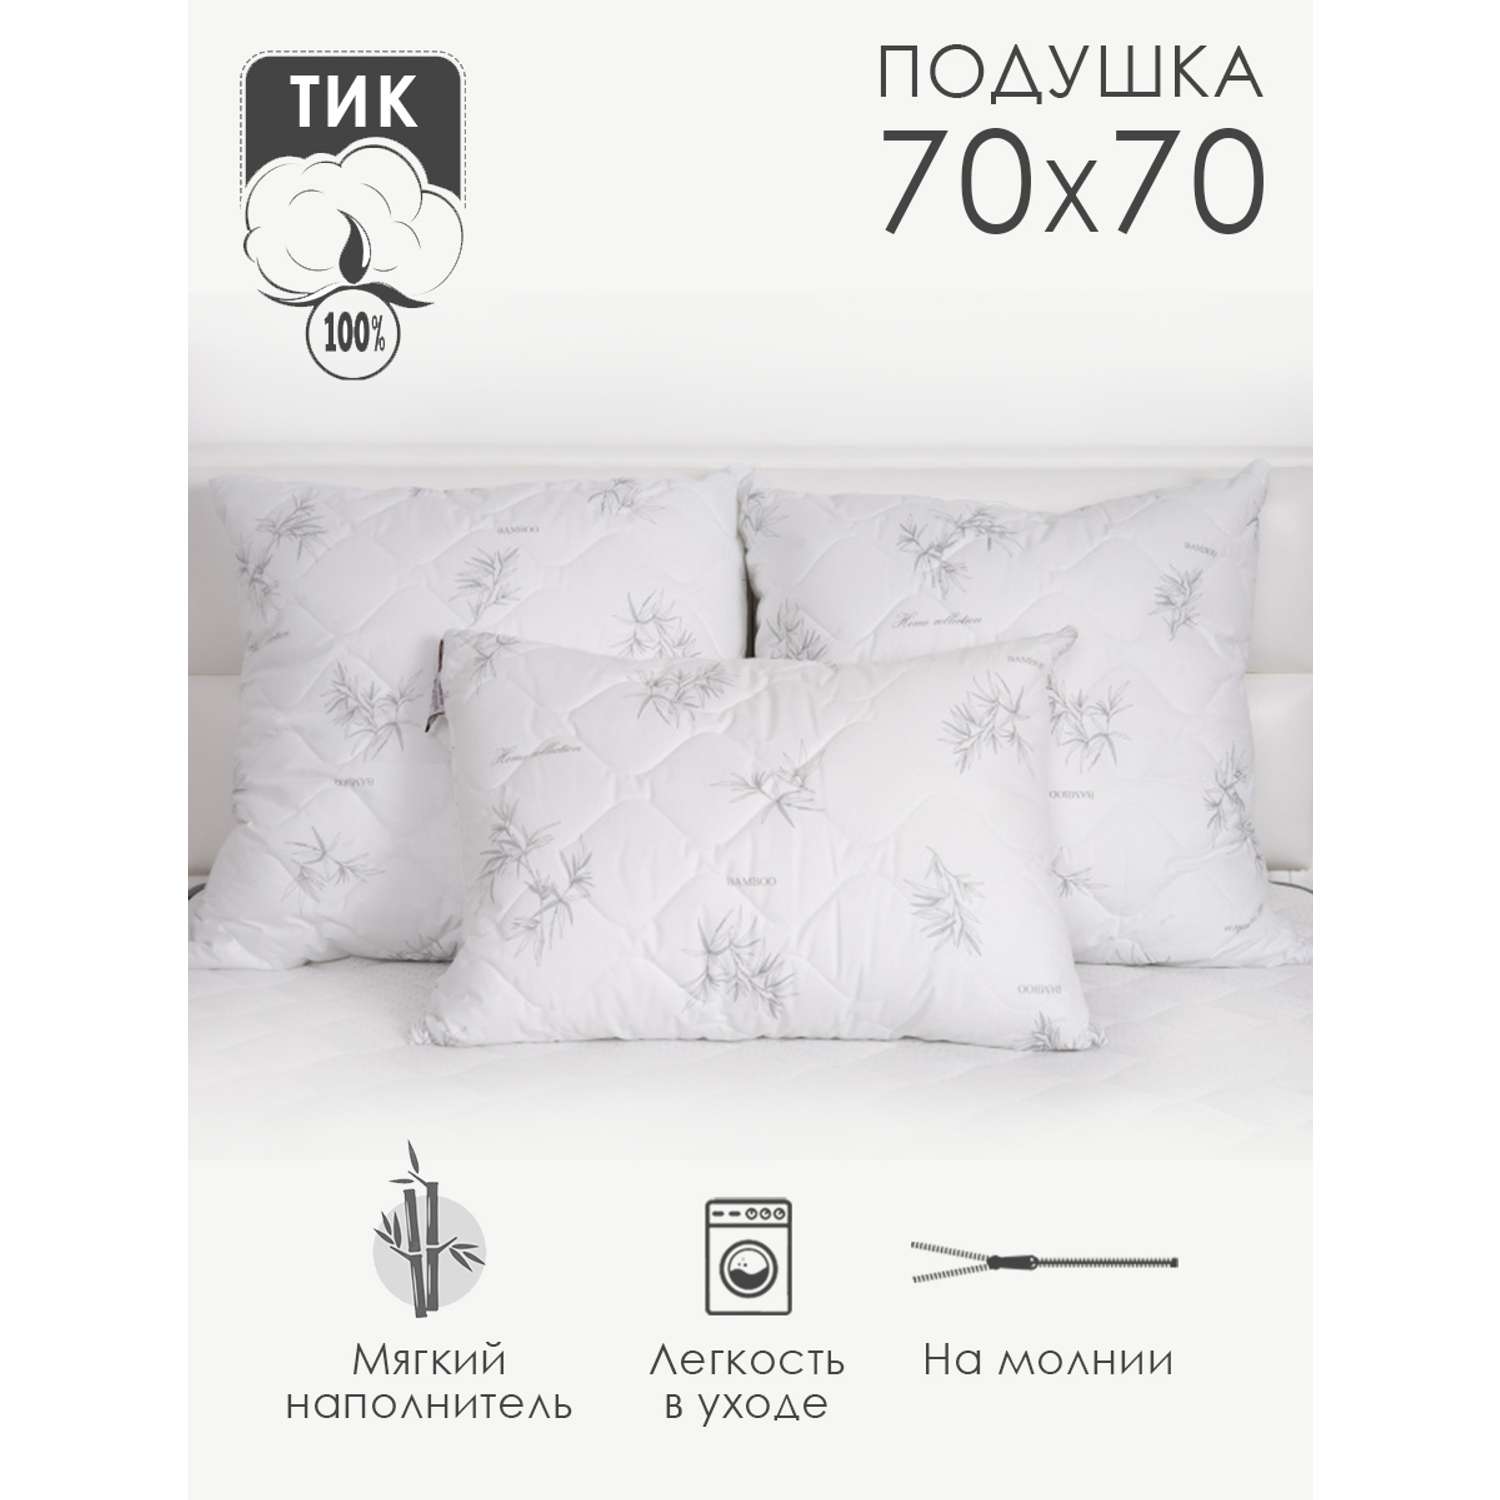 Подушка для сна MILANIKA Бамбук тик 70*70 молния 1 шт - фото 1